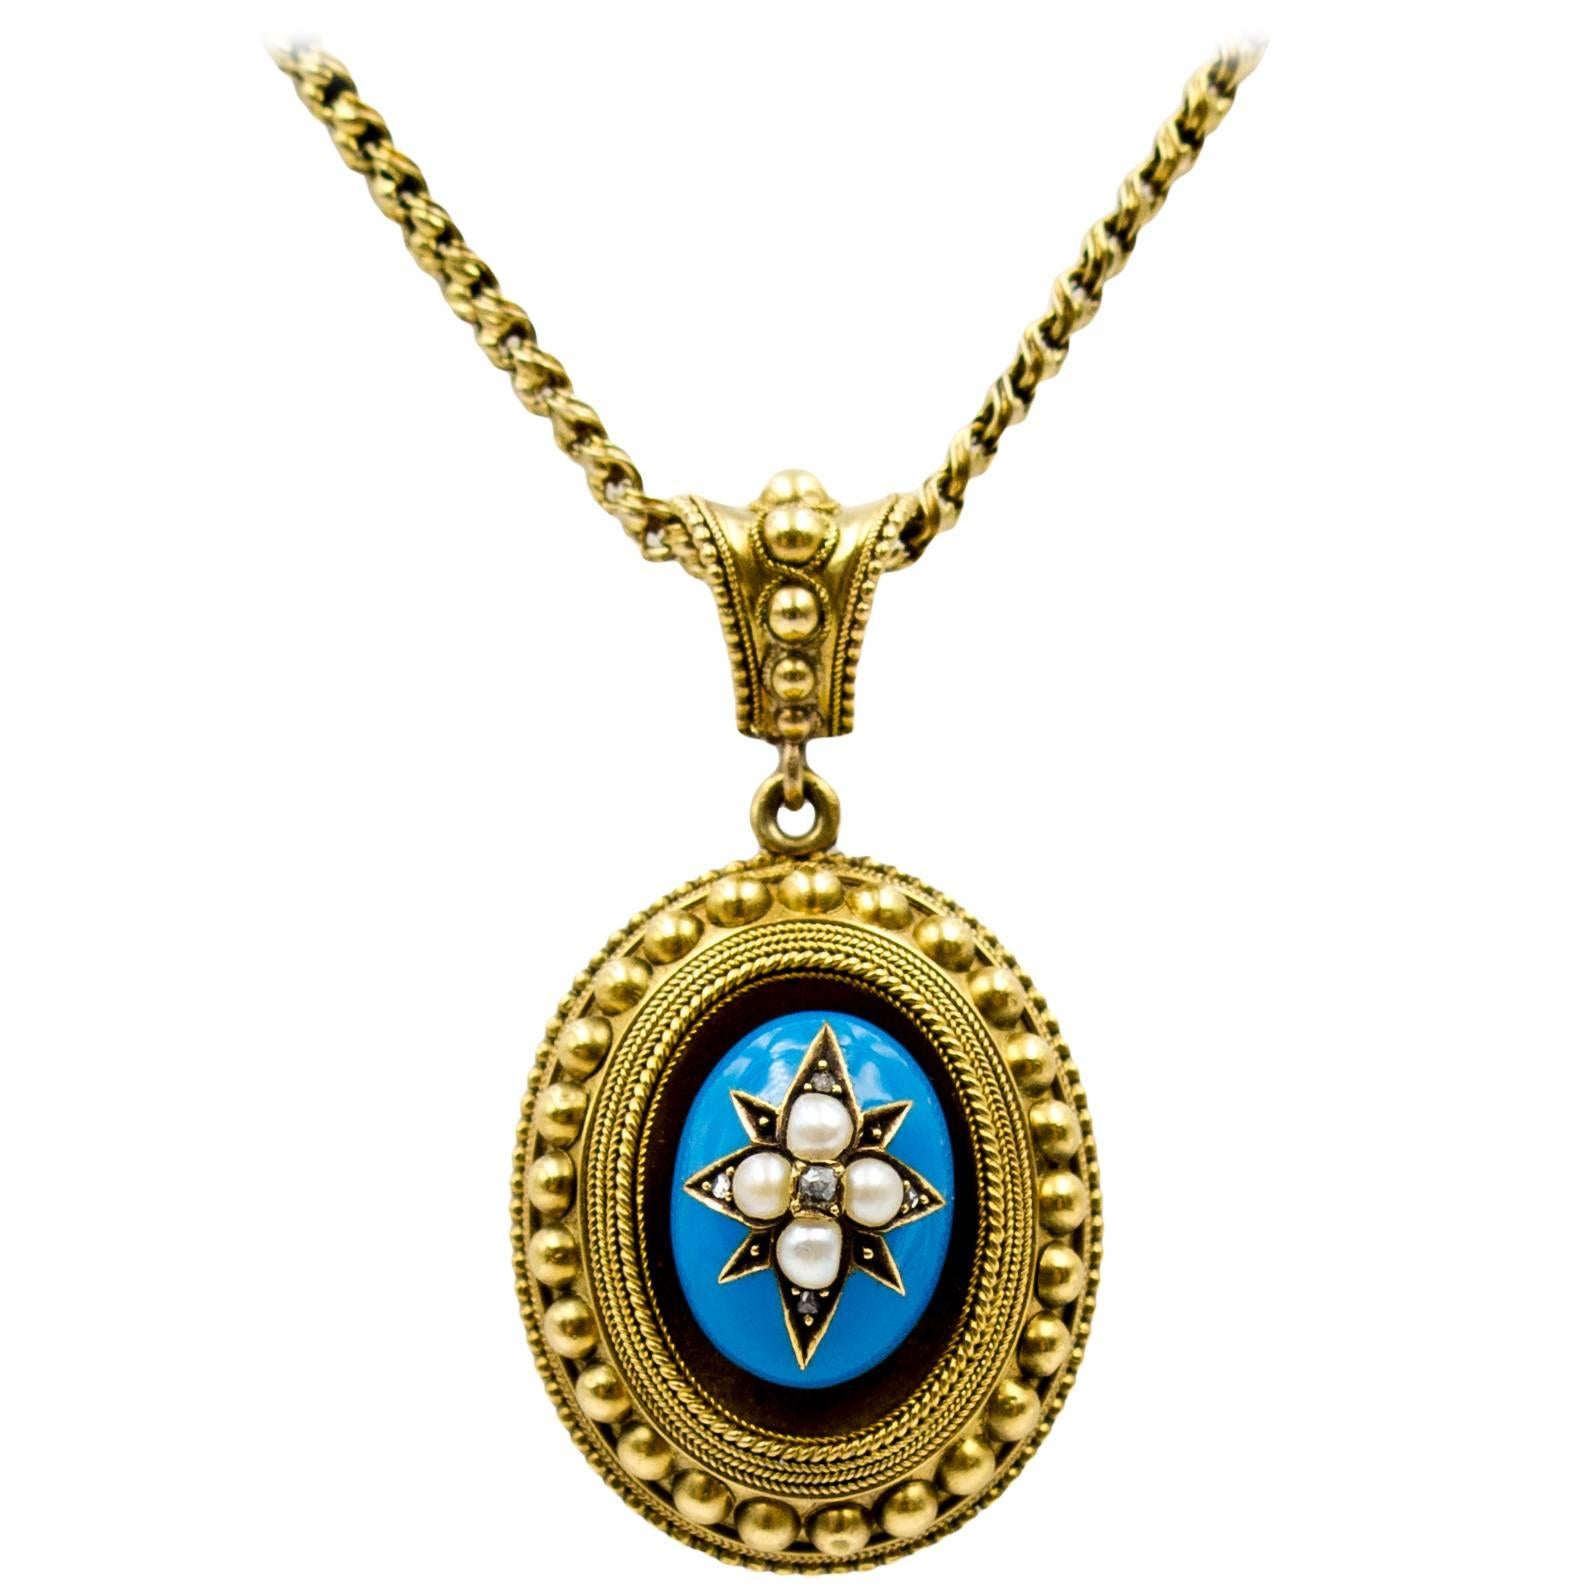 Romantic Victorian Enamel Diamond and Pearl Pendant and Chain